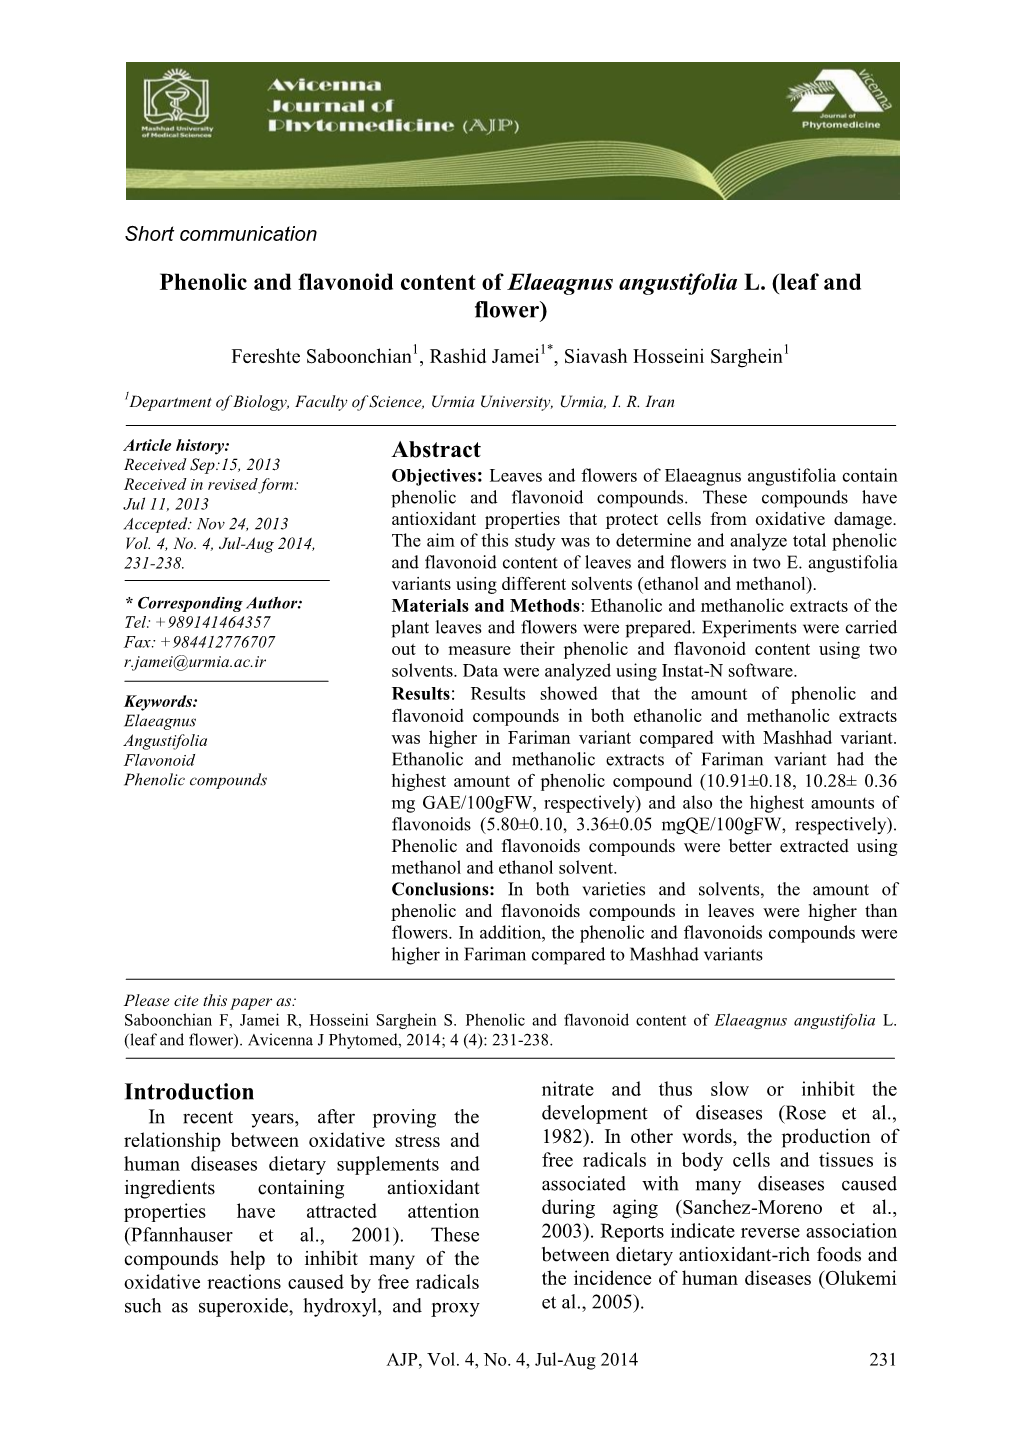 Phenolic and Flavonoid Content of Elaeagnus Angustifolia L. (Leaf and Flower)